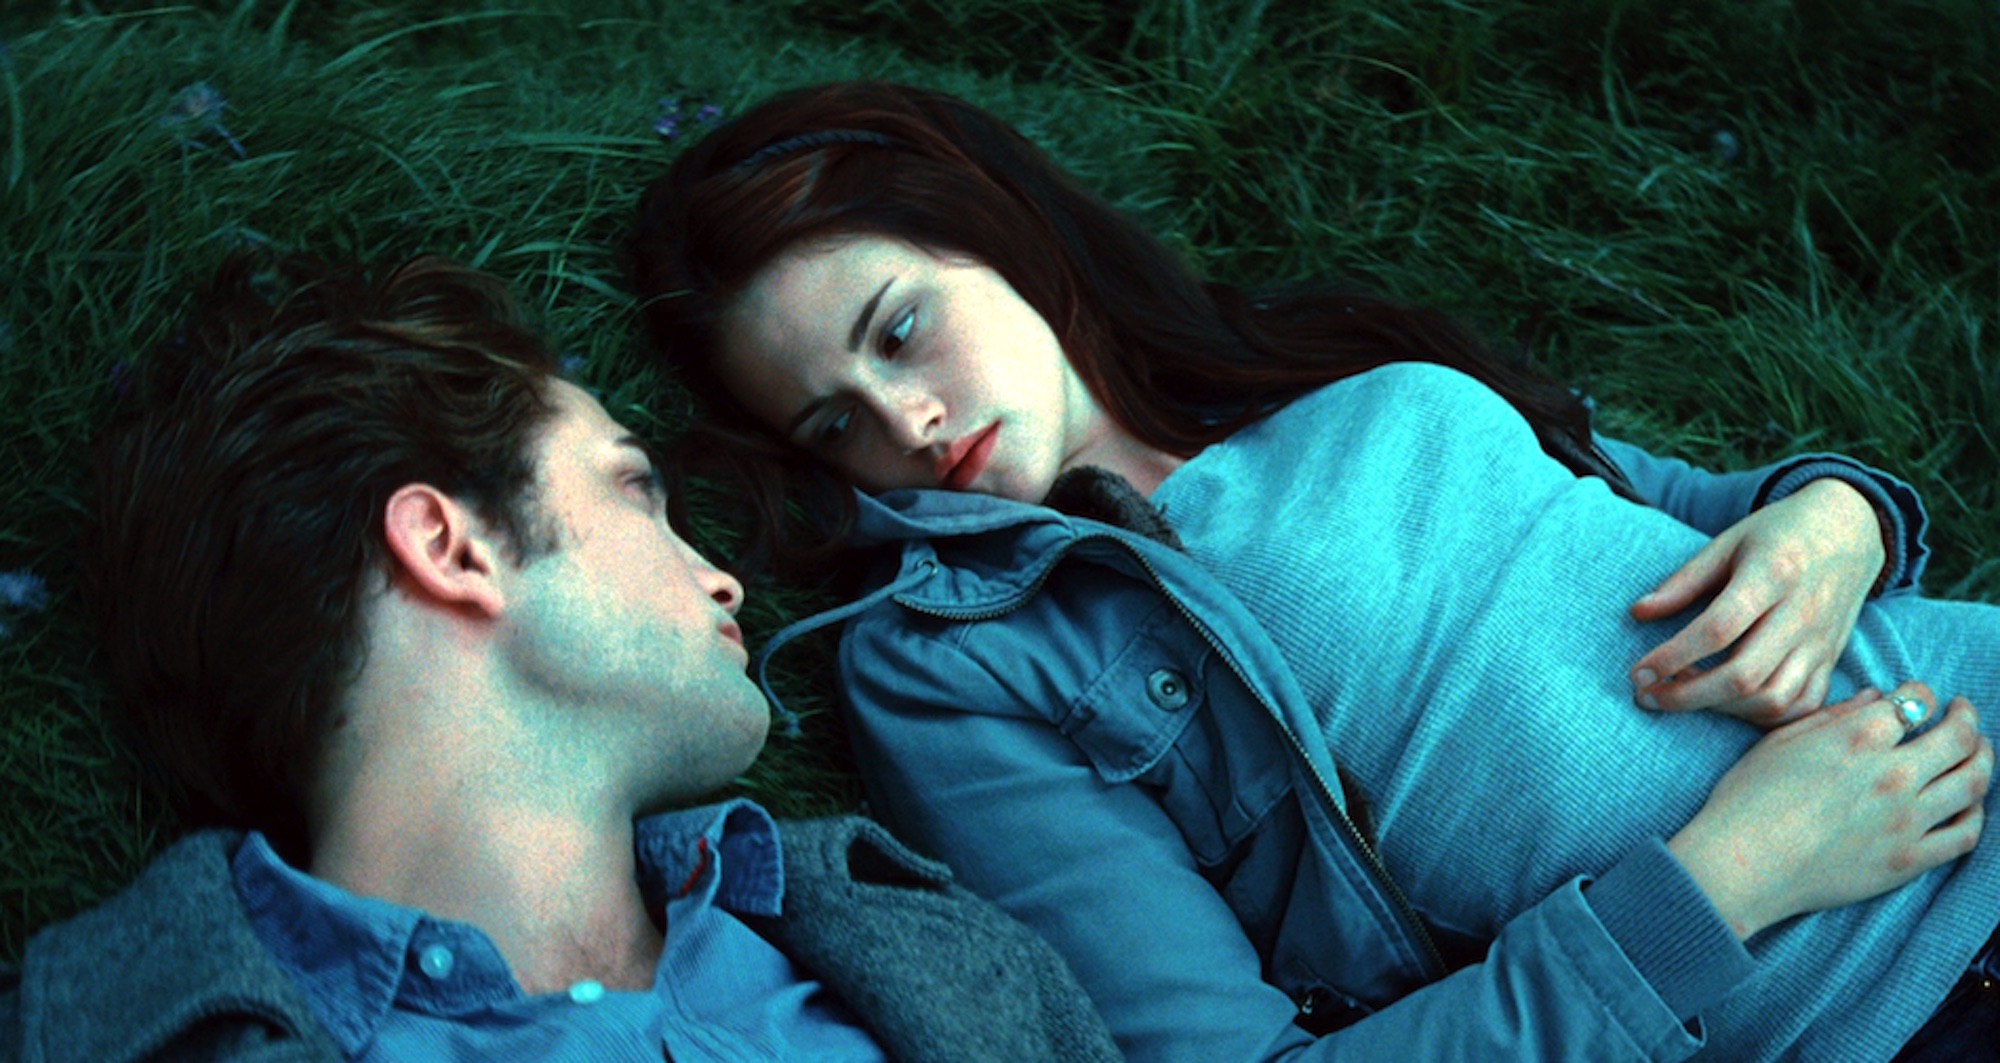 Edward Cullen (Robert Pattinson) and Bella Swan (Kristen Stewart) in his meadow in 'Twilight.'